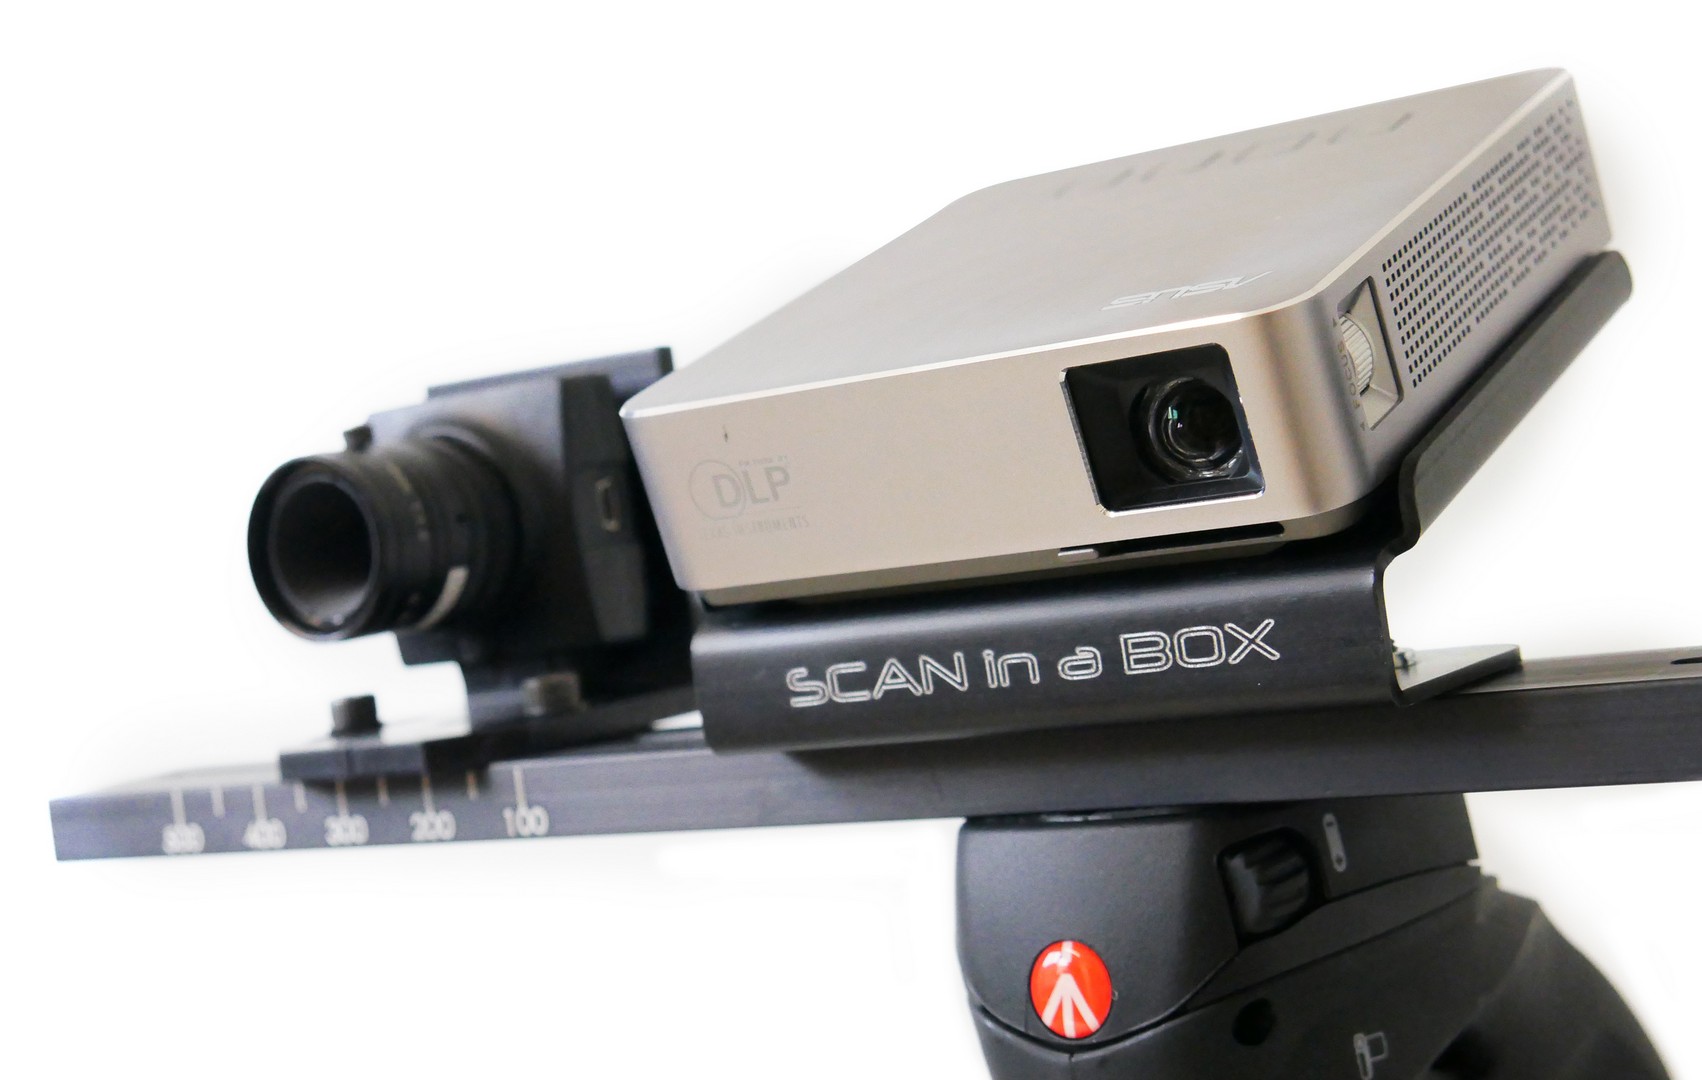 картинка 3D сканер Open Technologies Scan in a Box Интернет-магазин «3DTool»